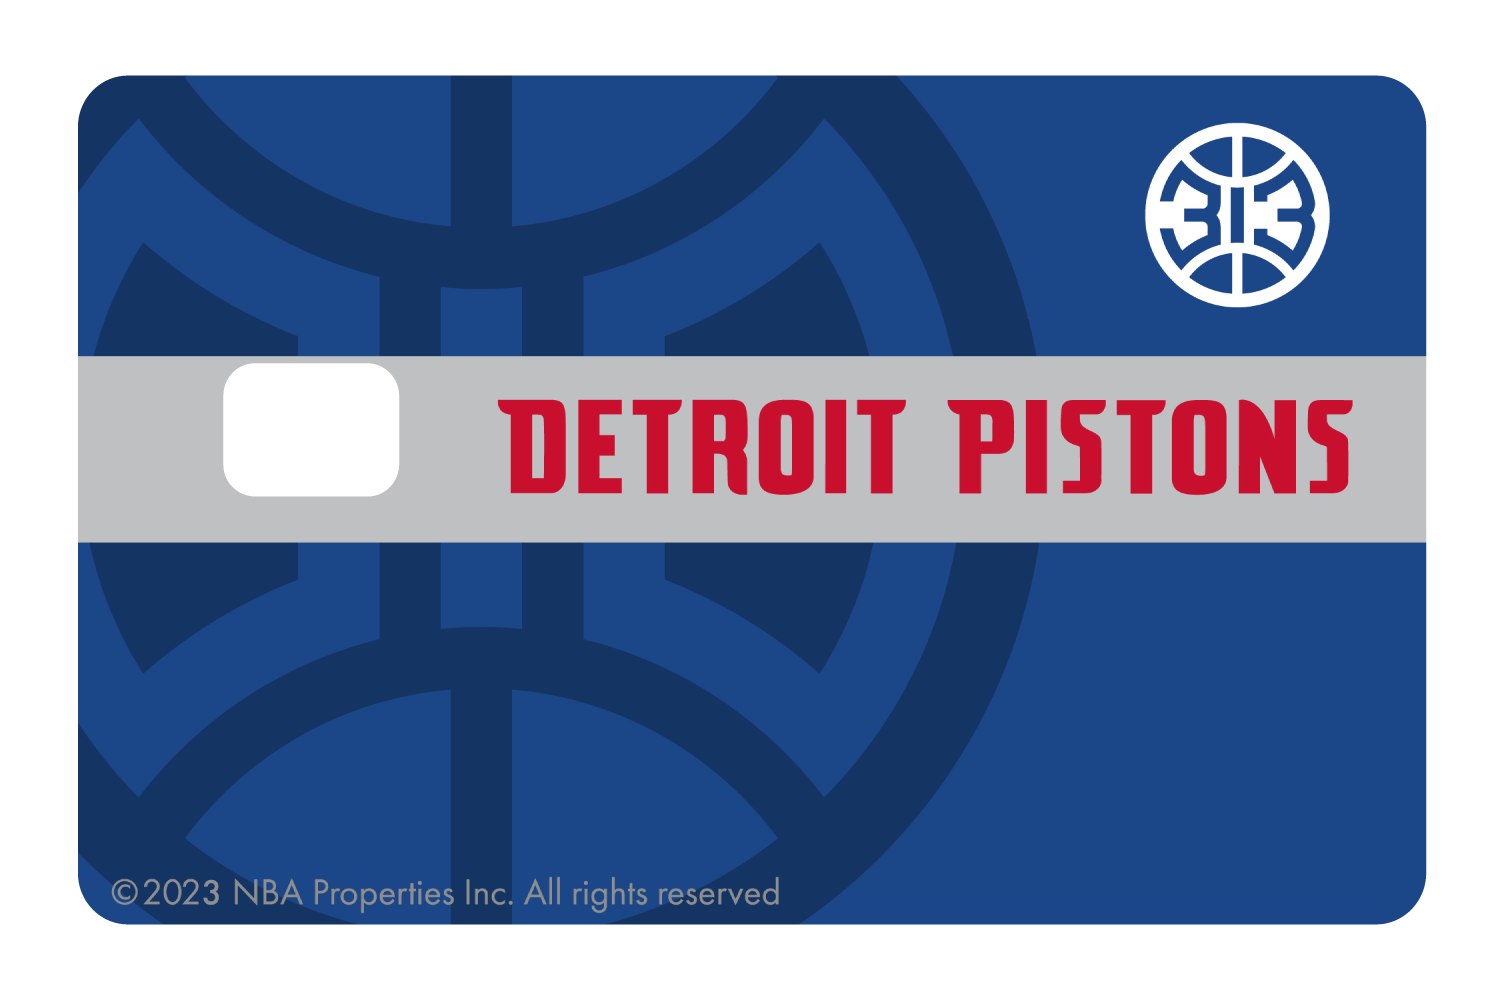 Detroit Pistons: Midcourt